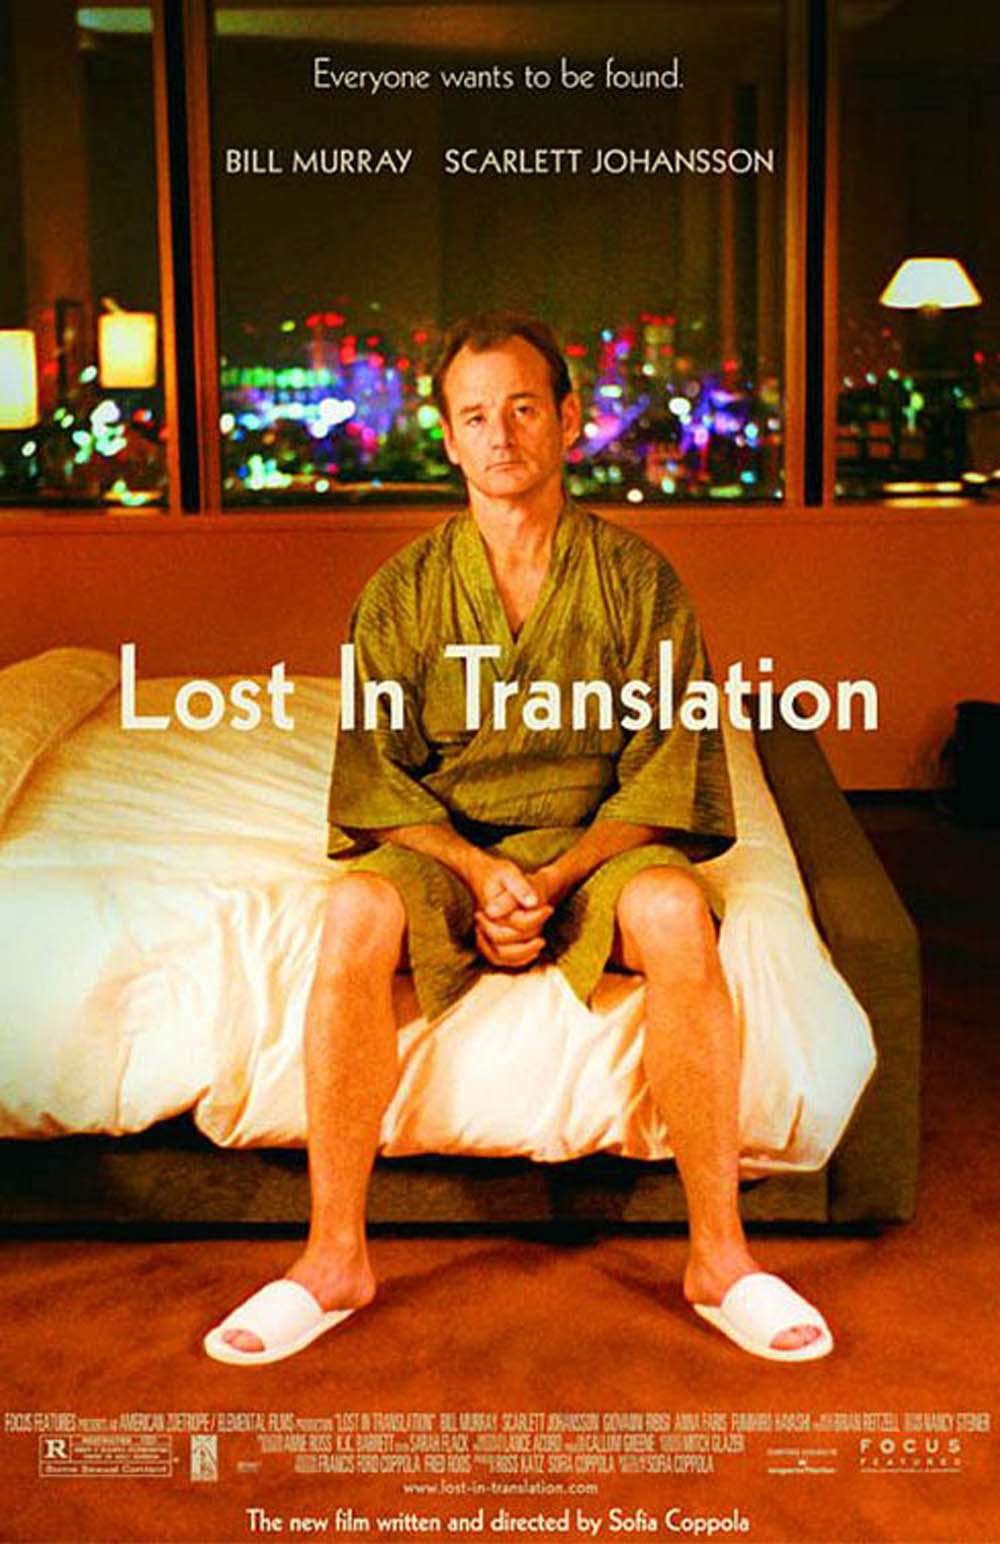 Bill Murray in Lost in Translation